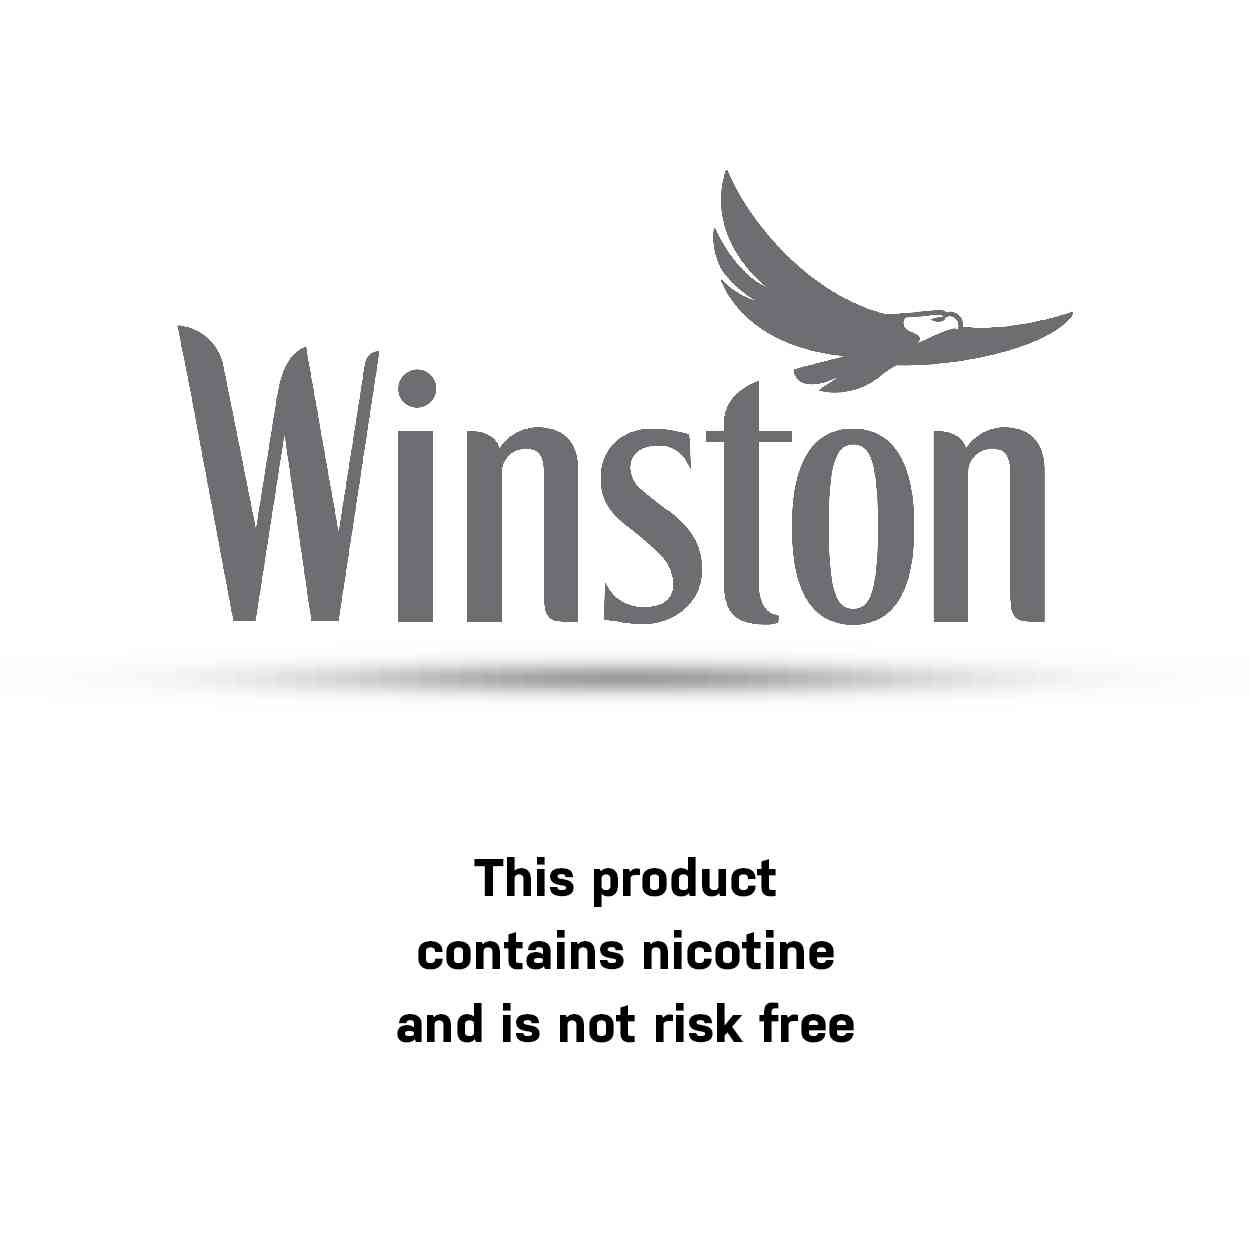 Winiston One